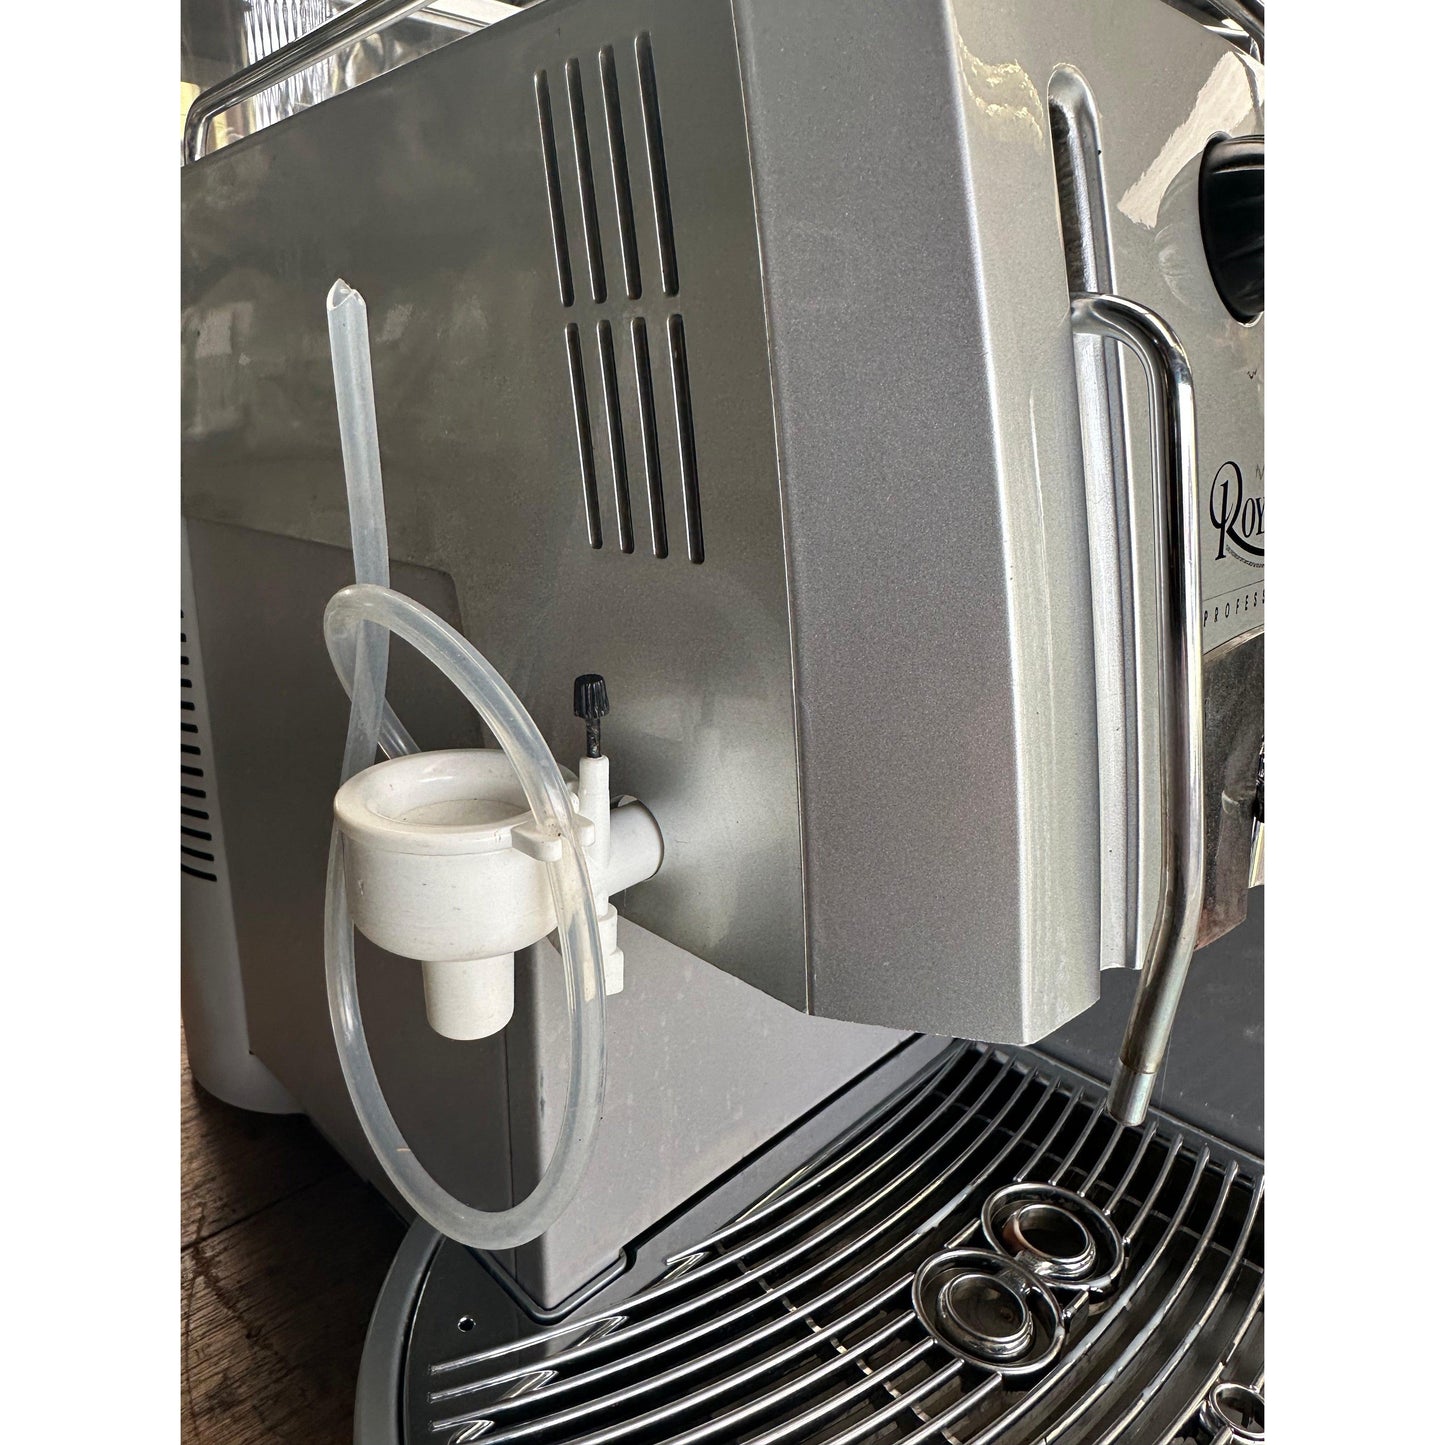 Saeco Royal Professional Coffee Machine - Preloved